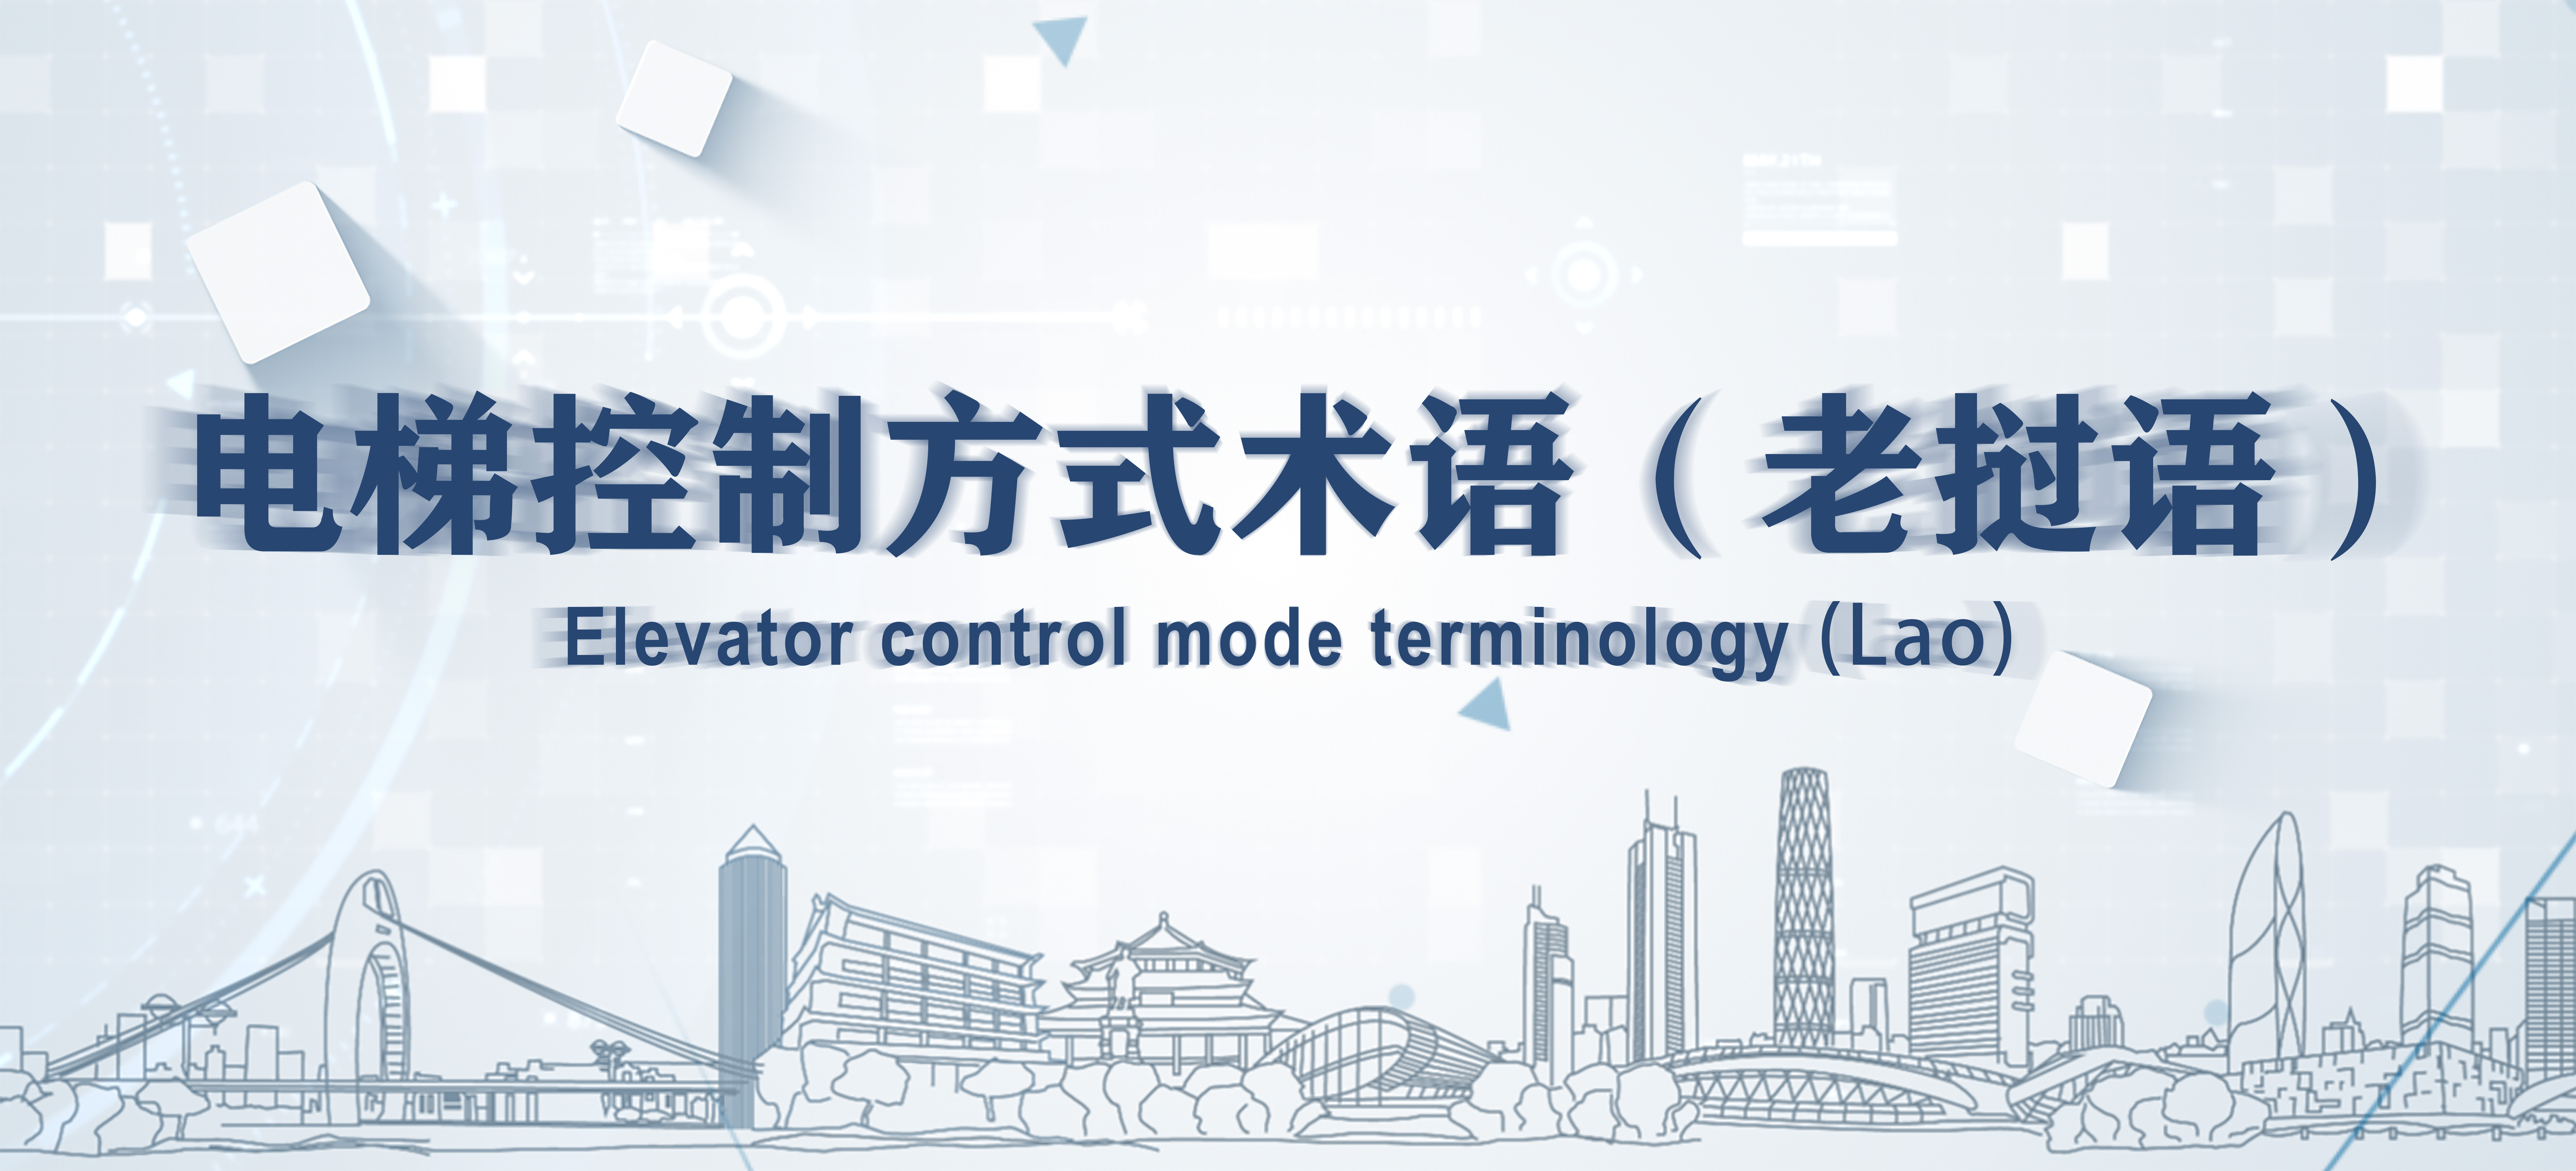 Elevator control mode terminology (Lao)